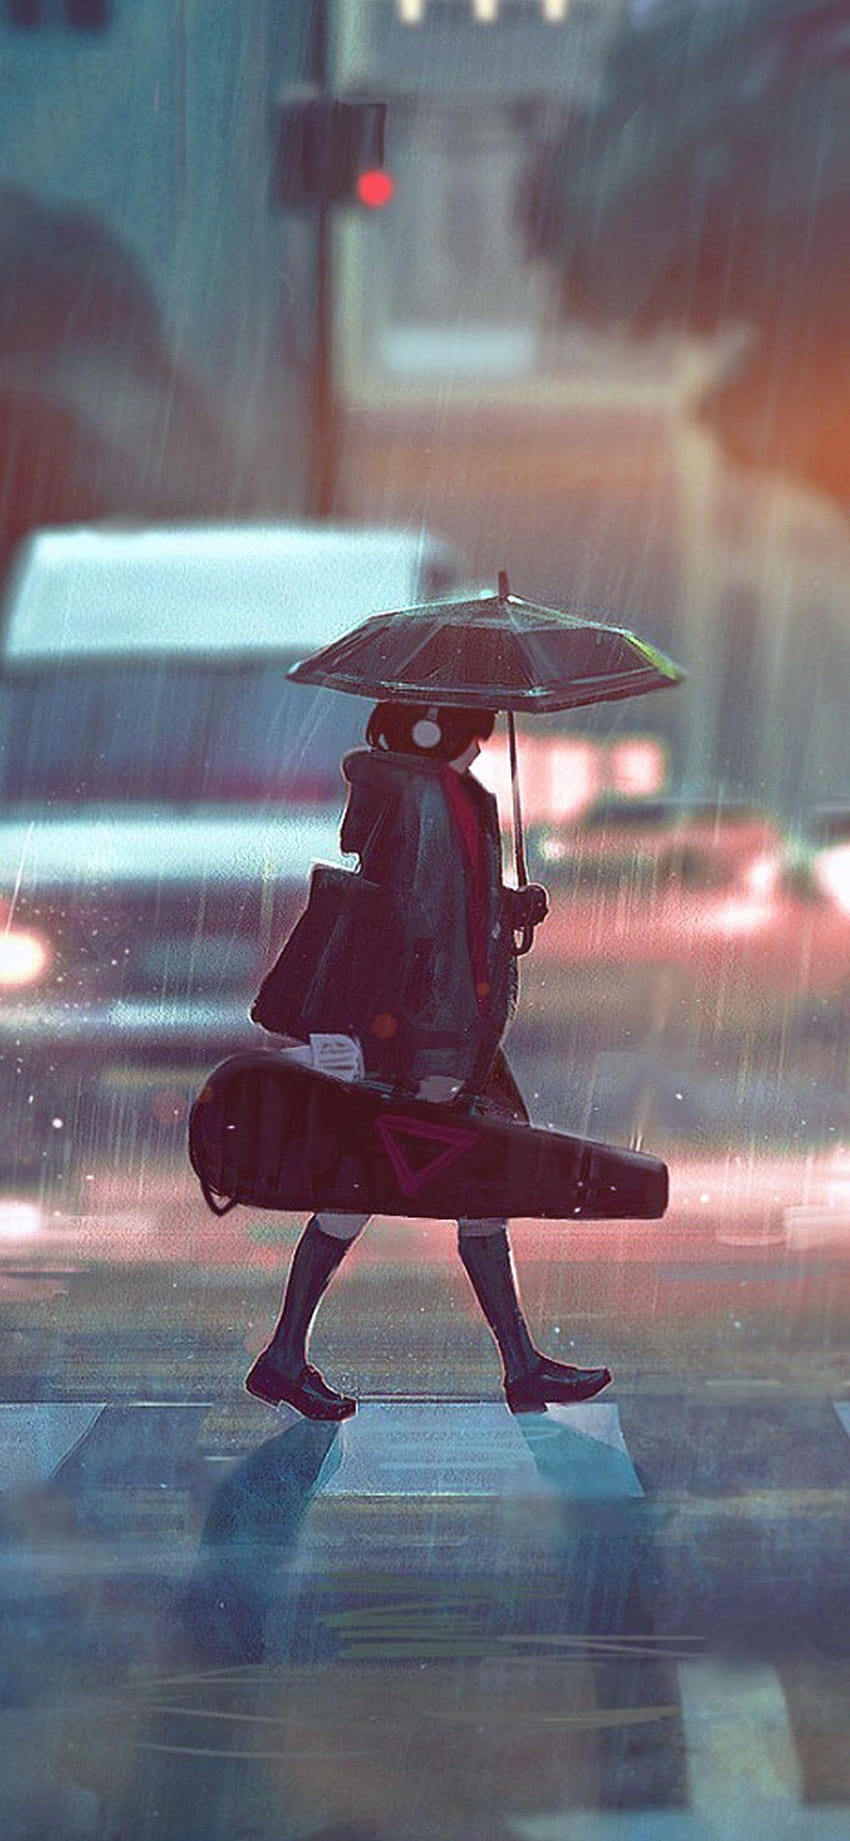 A rainy day Painting by Koustav Sen - Pixels